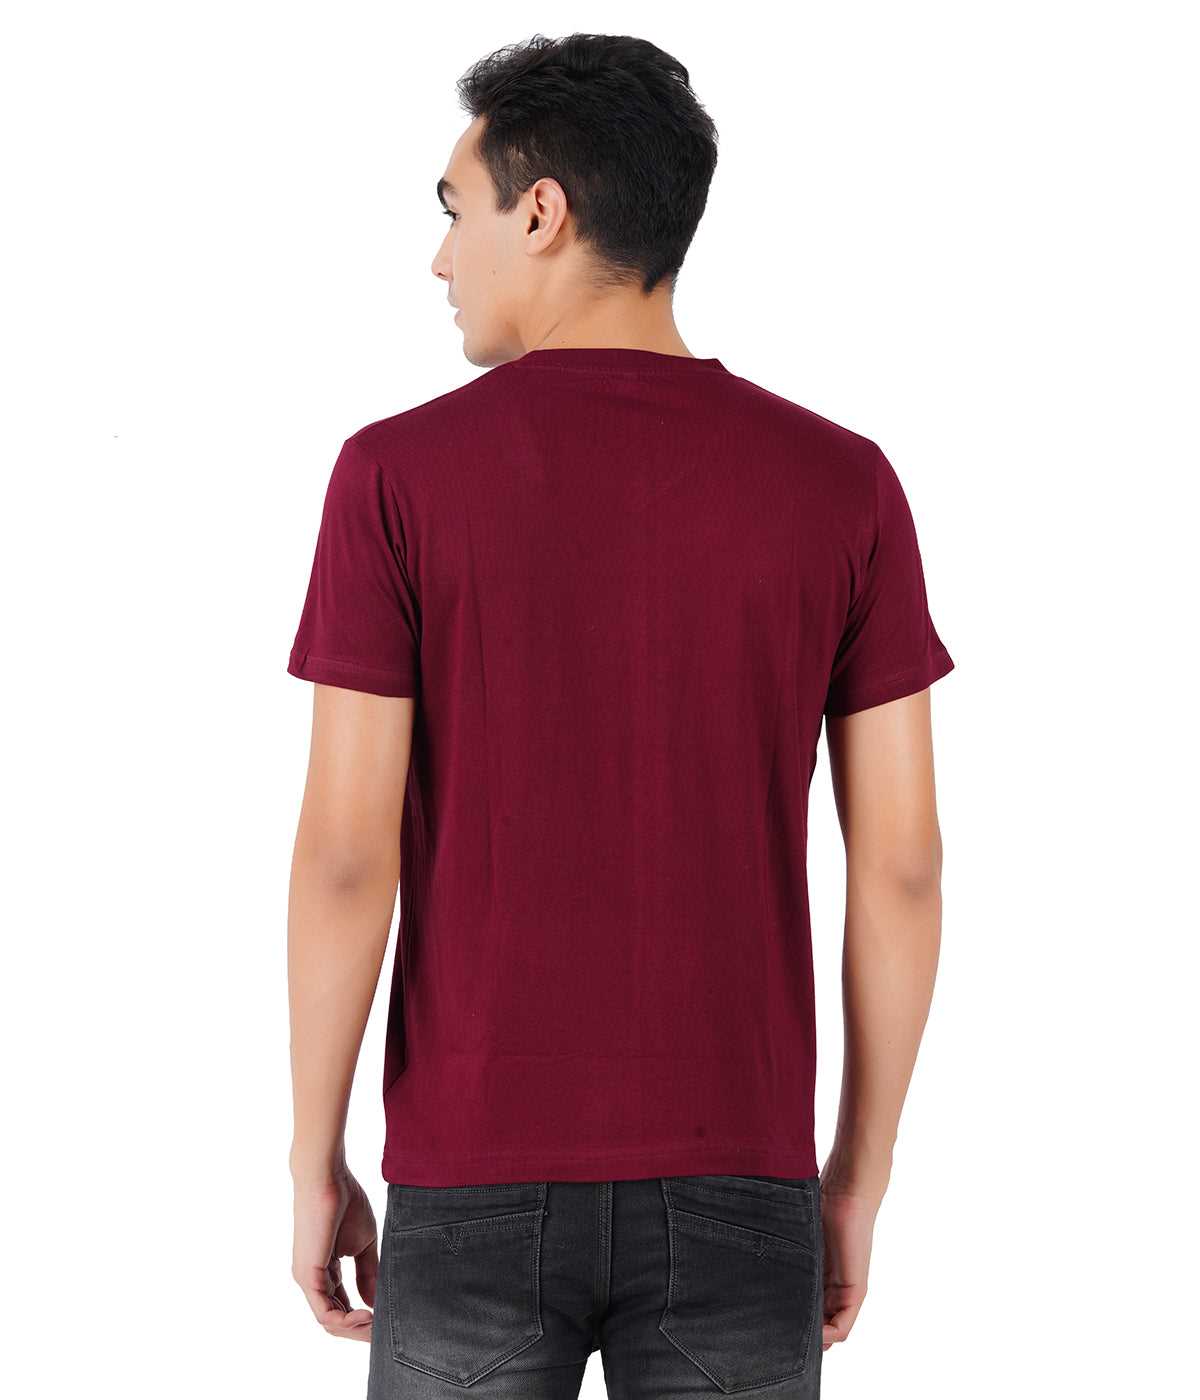 Buy v-neck maroon t-shirt